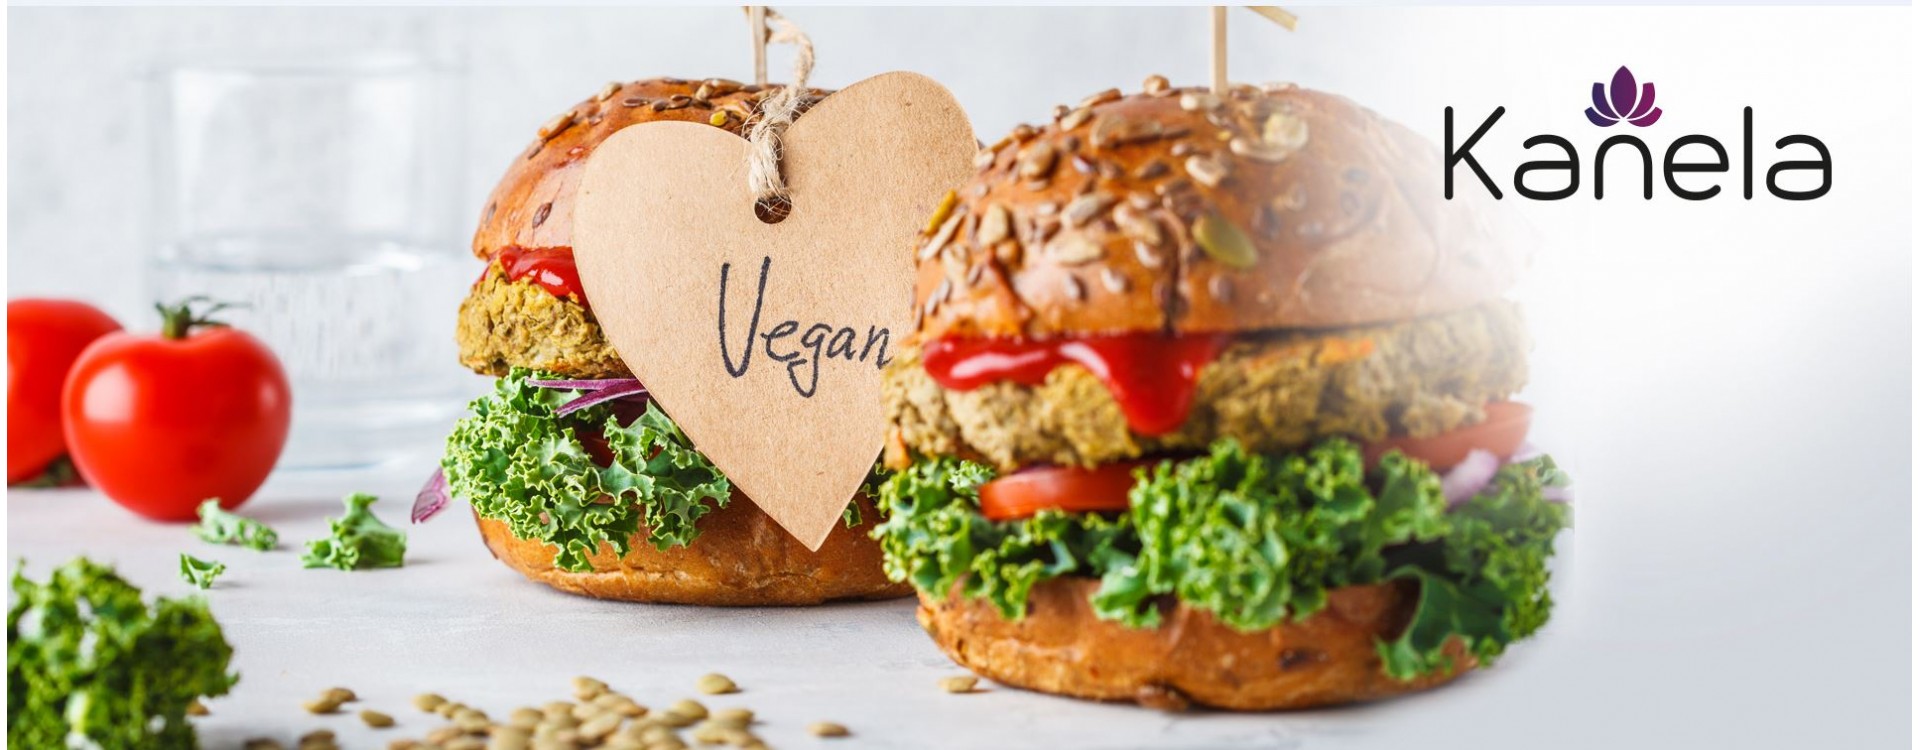 Is vegan diet healthy?